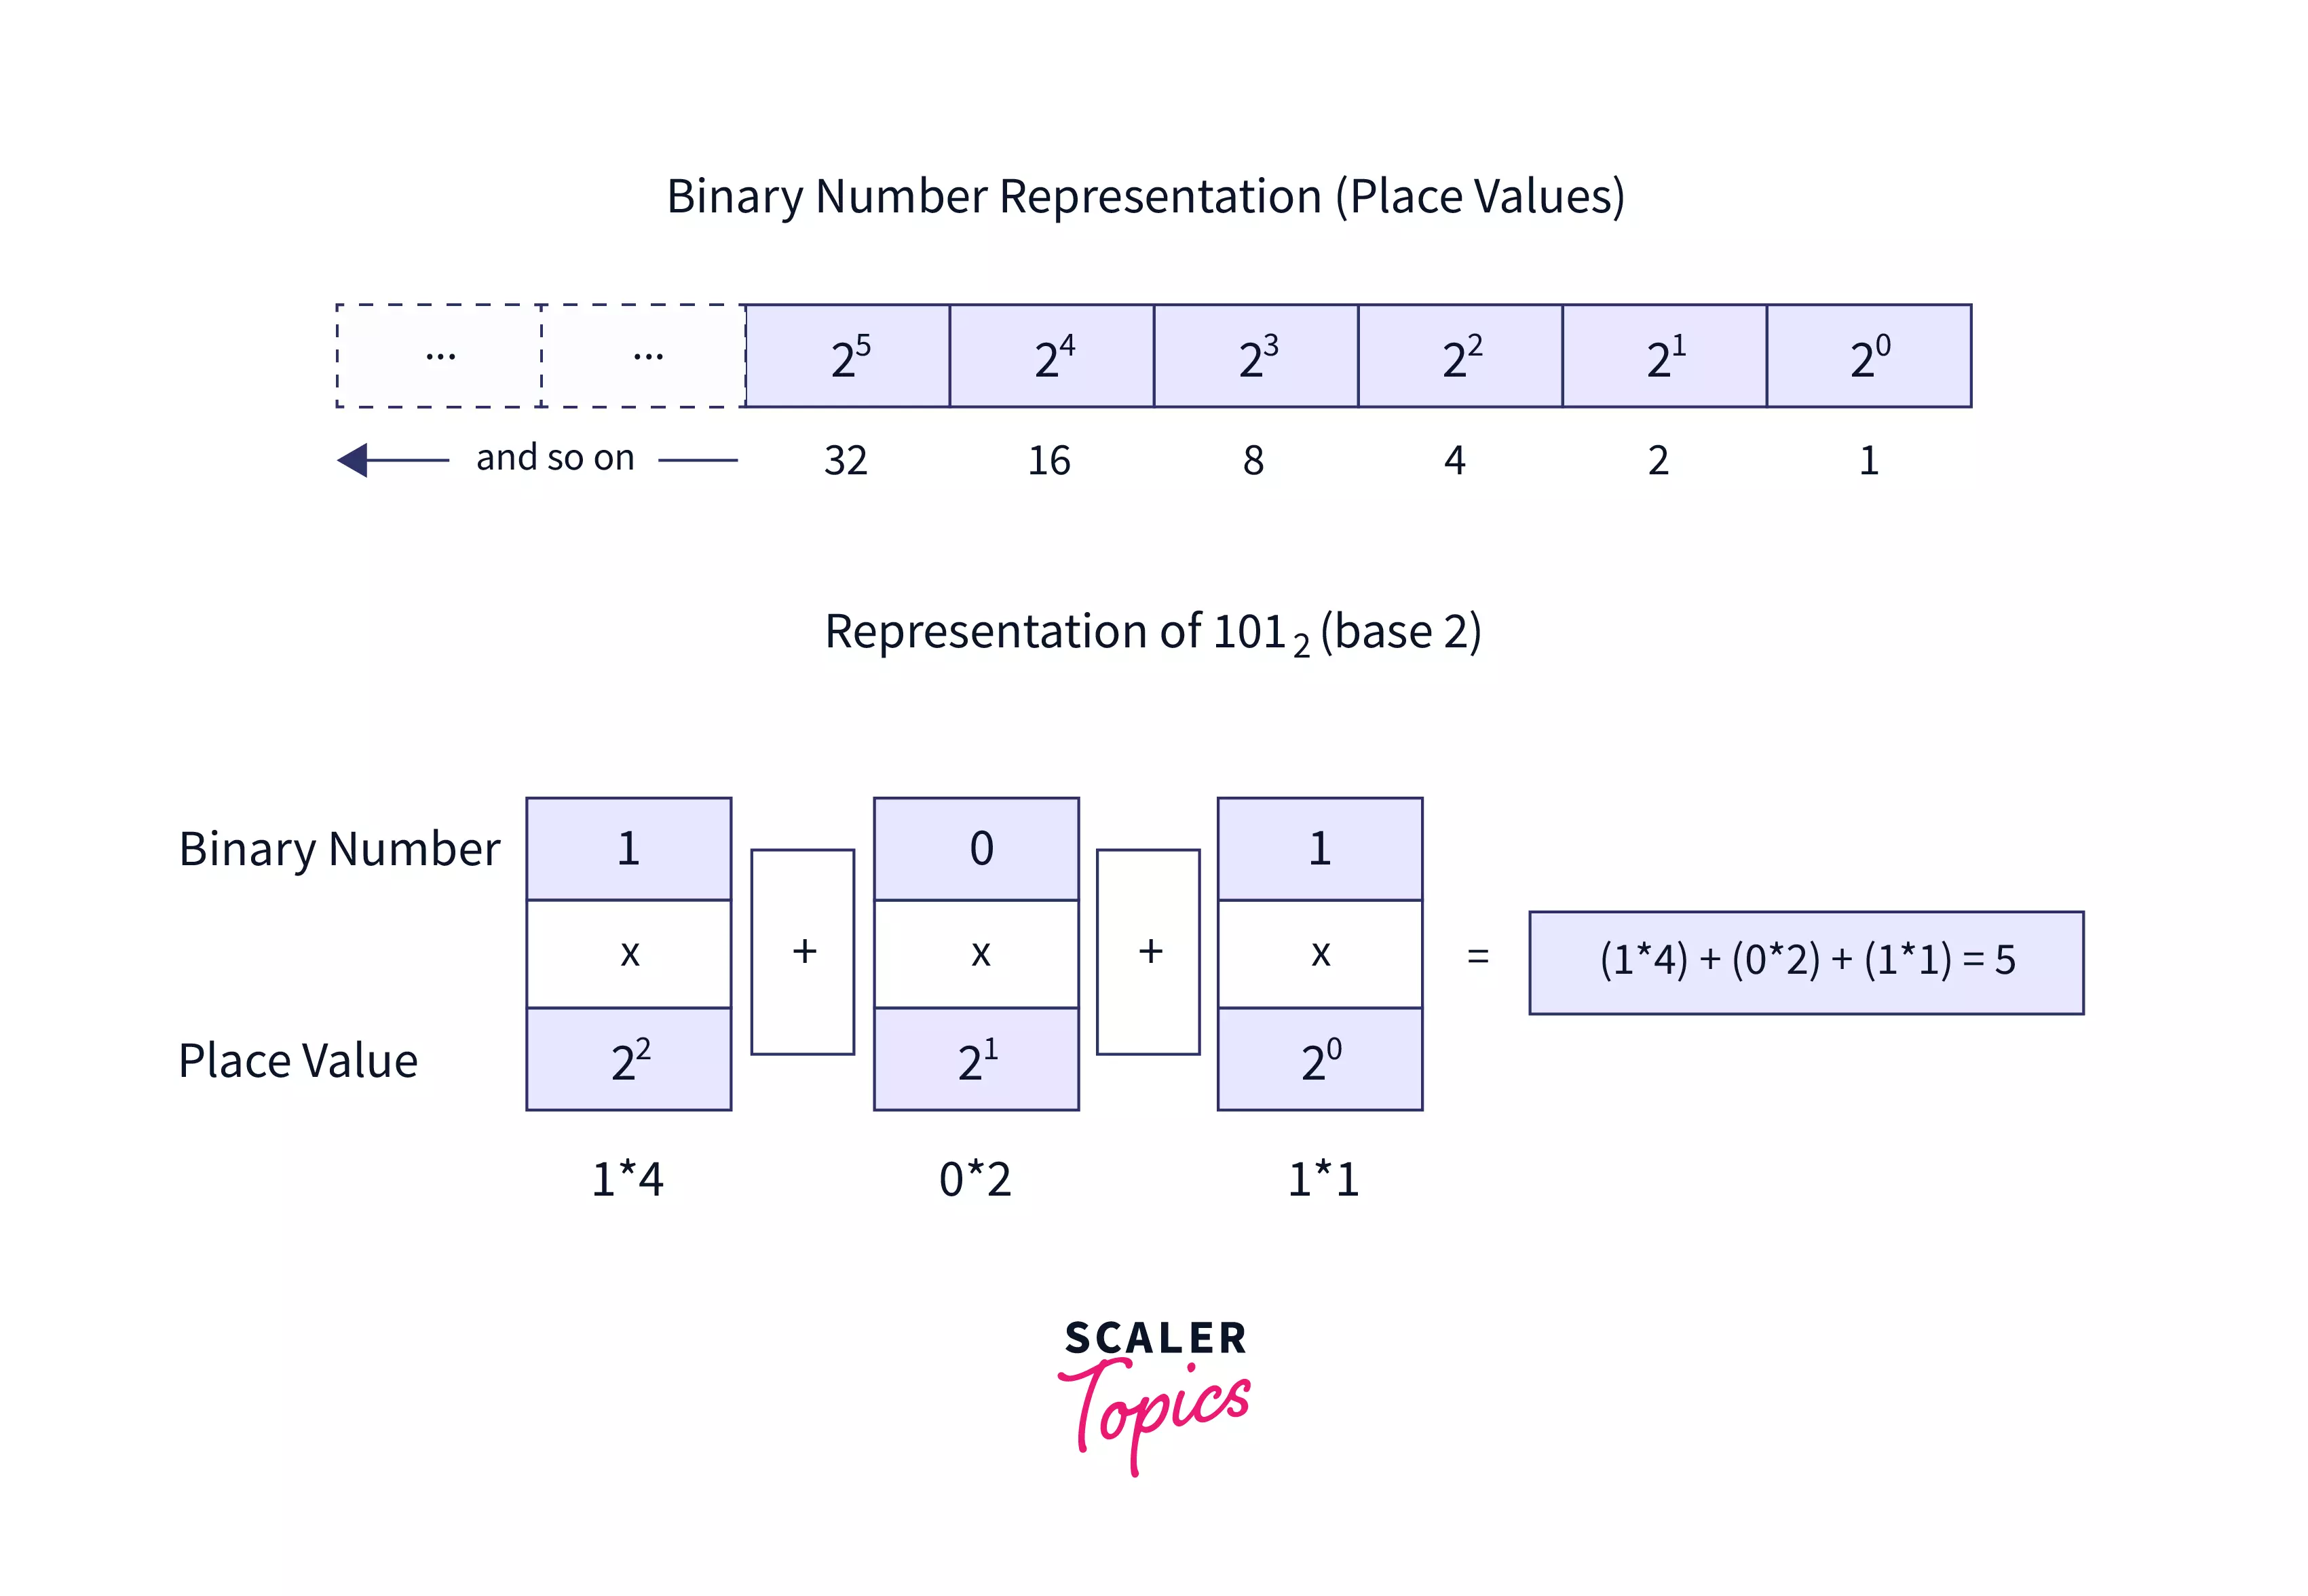 binary representation